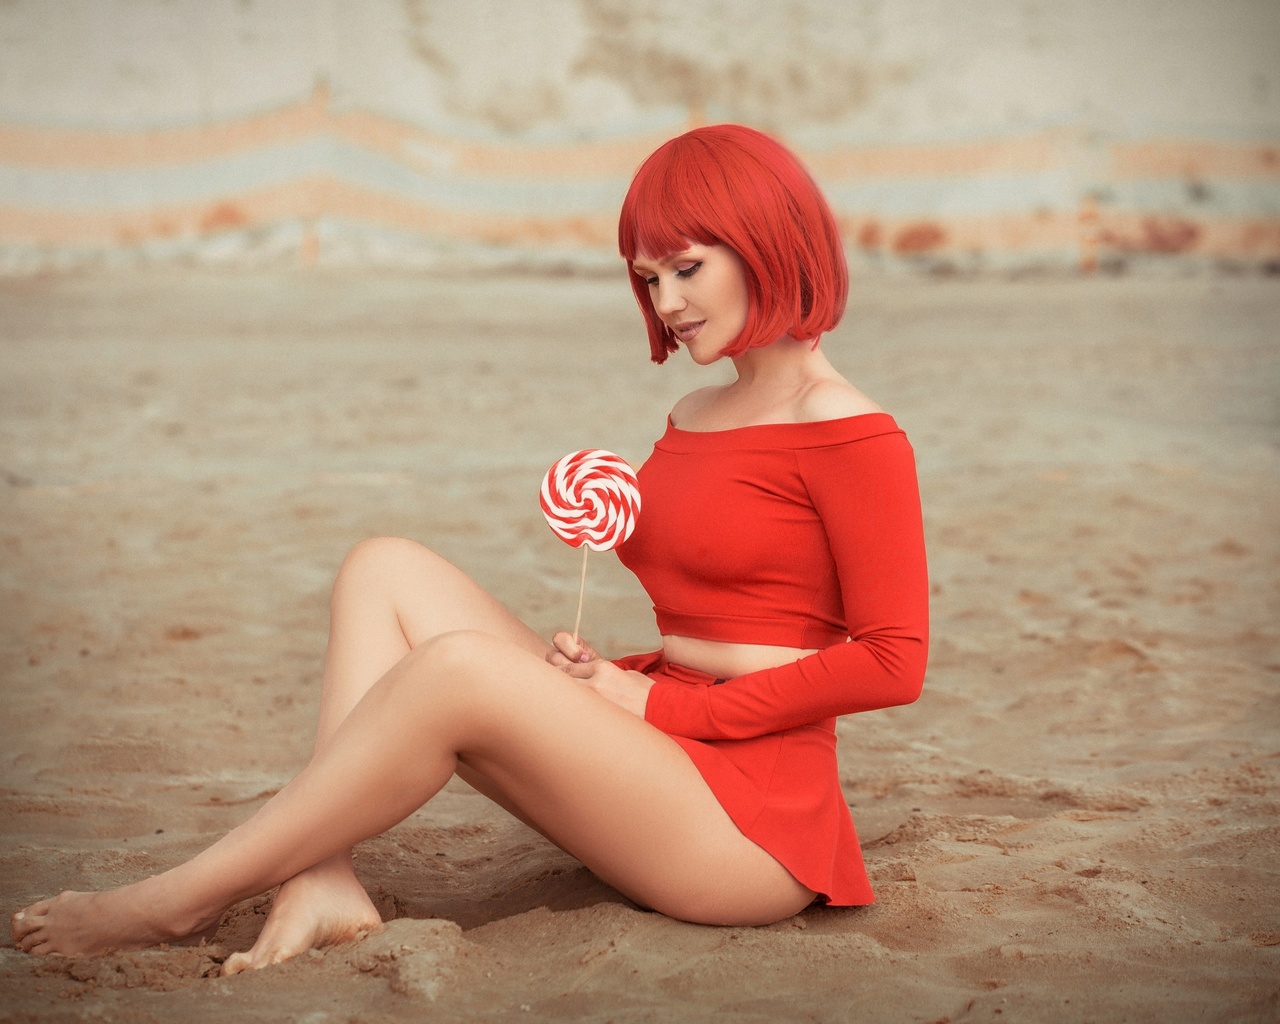 , stanislav maximov, outdoors, model, ass, red miniskirt, lollipop, redhead, makeup, sitting, red clothing